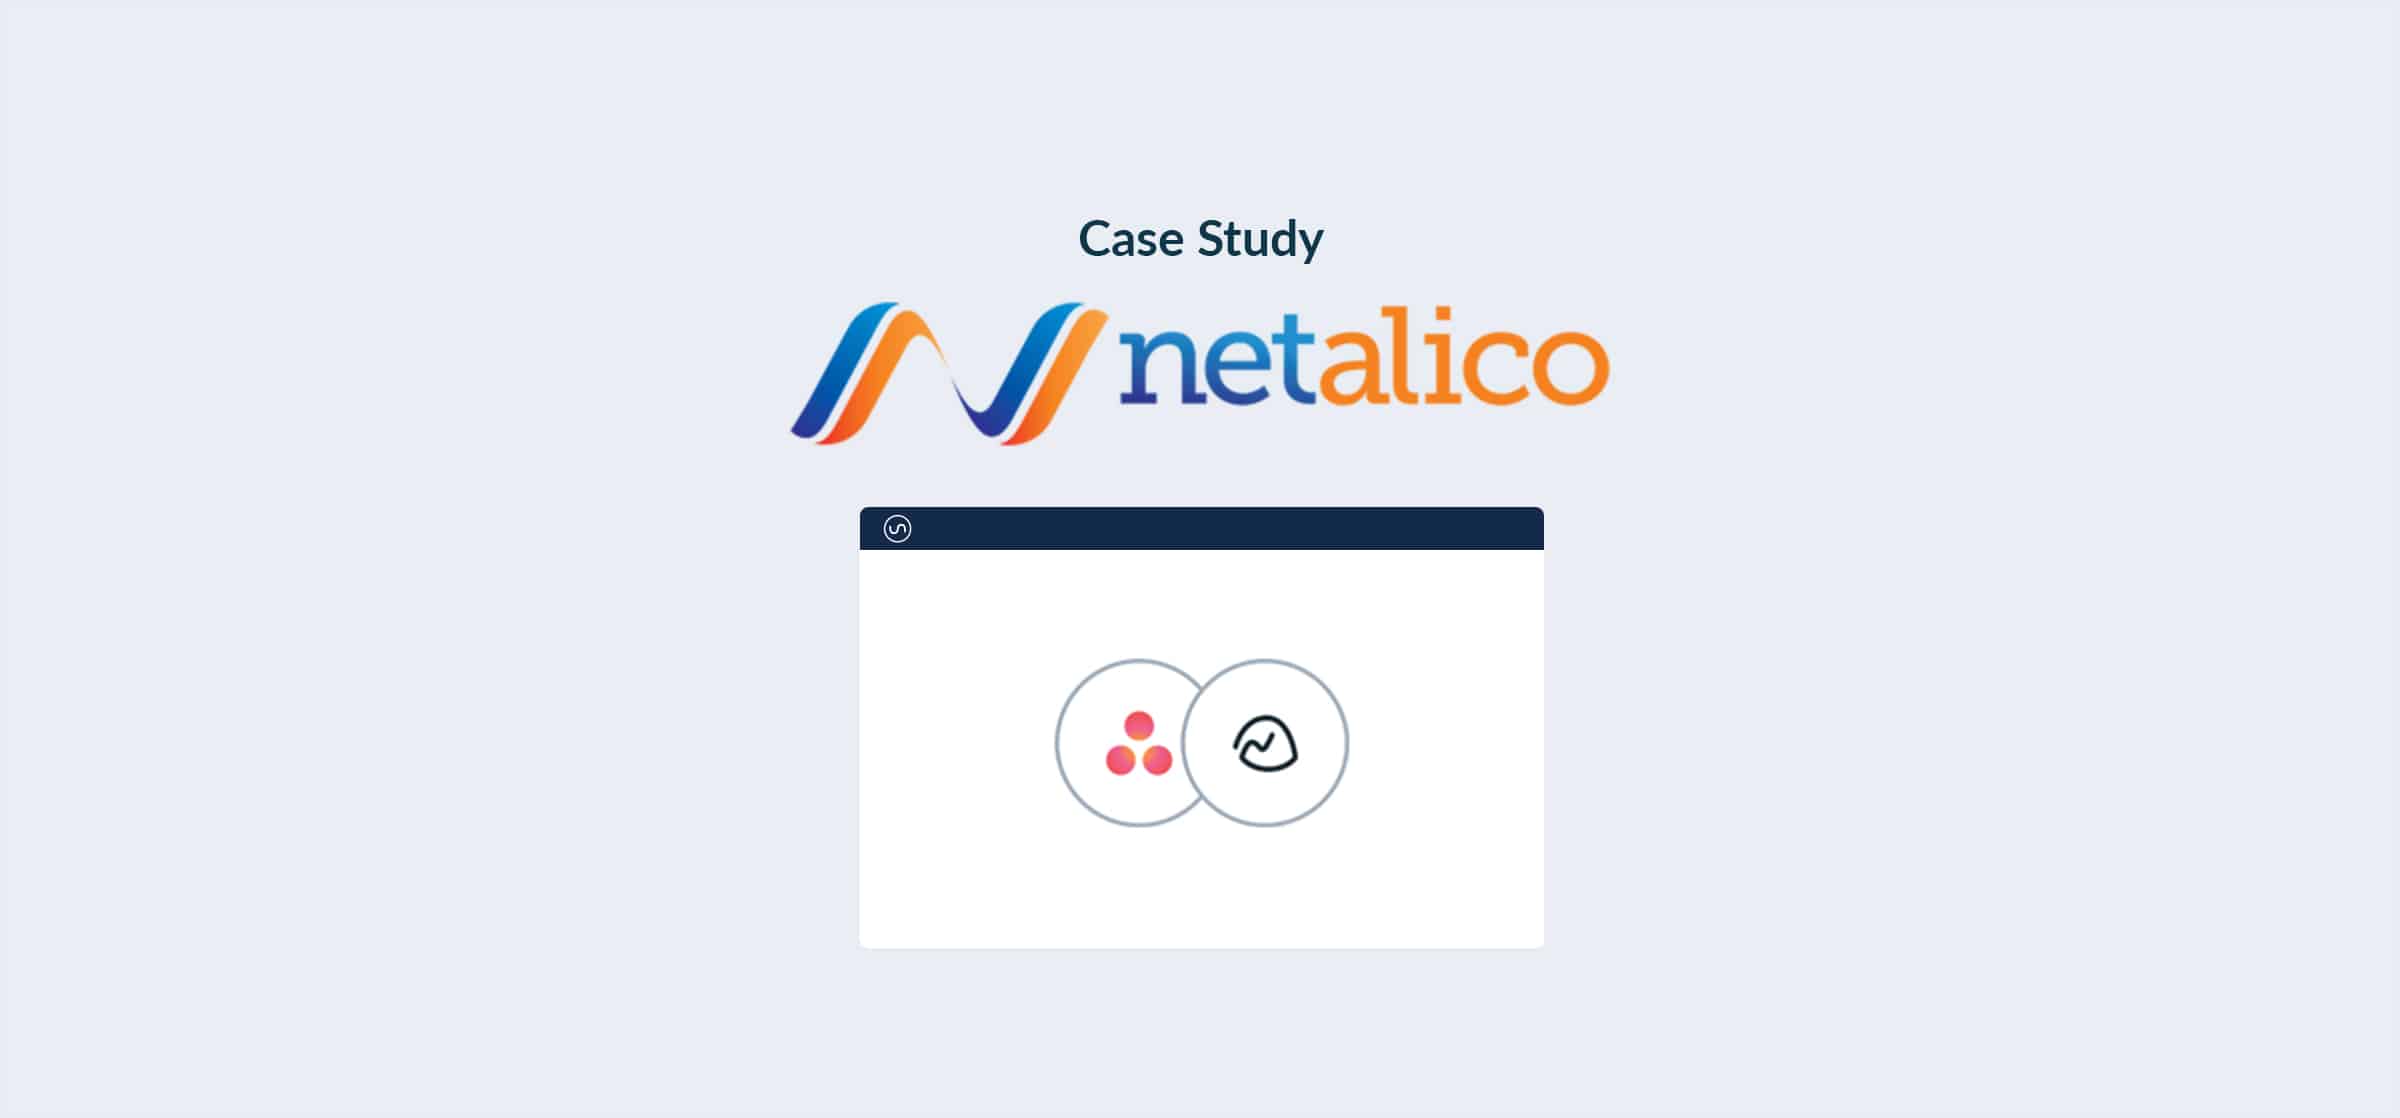 Logos for Netalico, Asana, and Basecamp, representing the case study